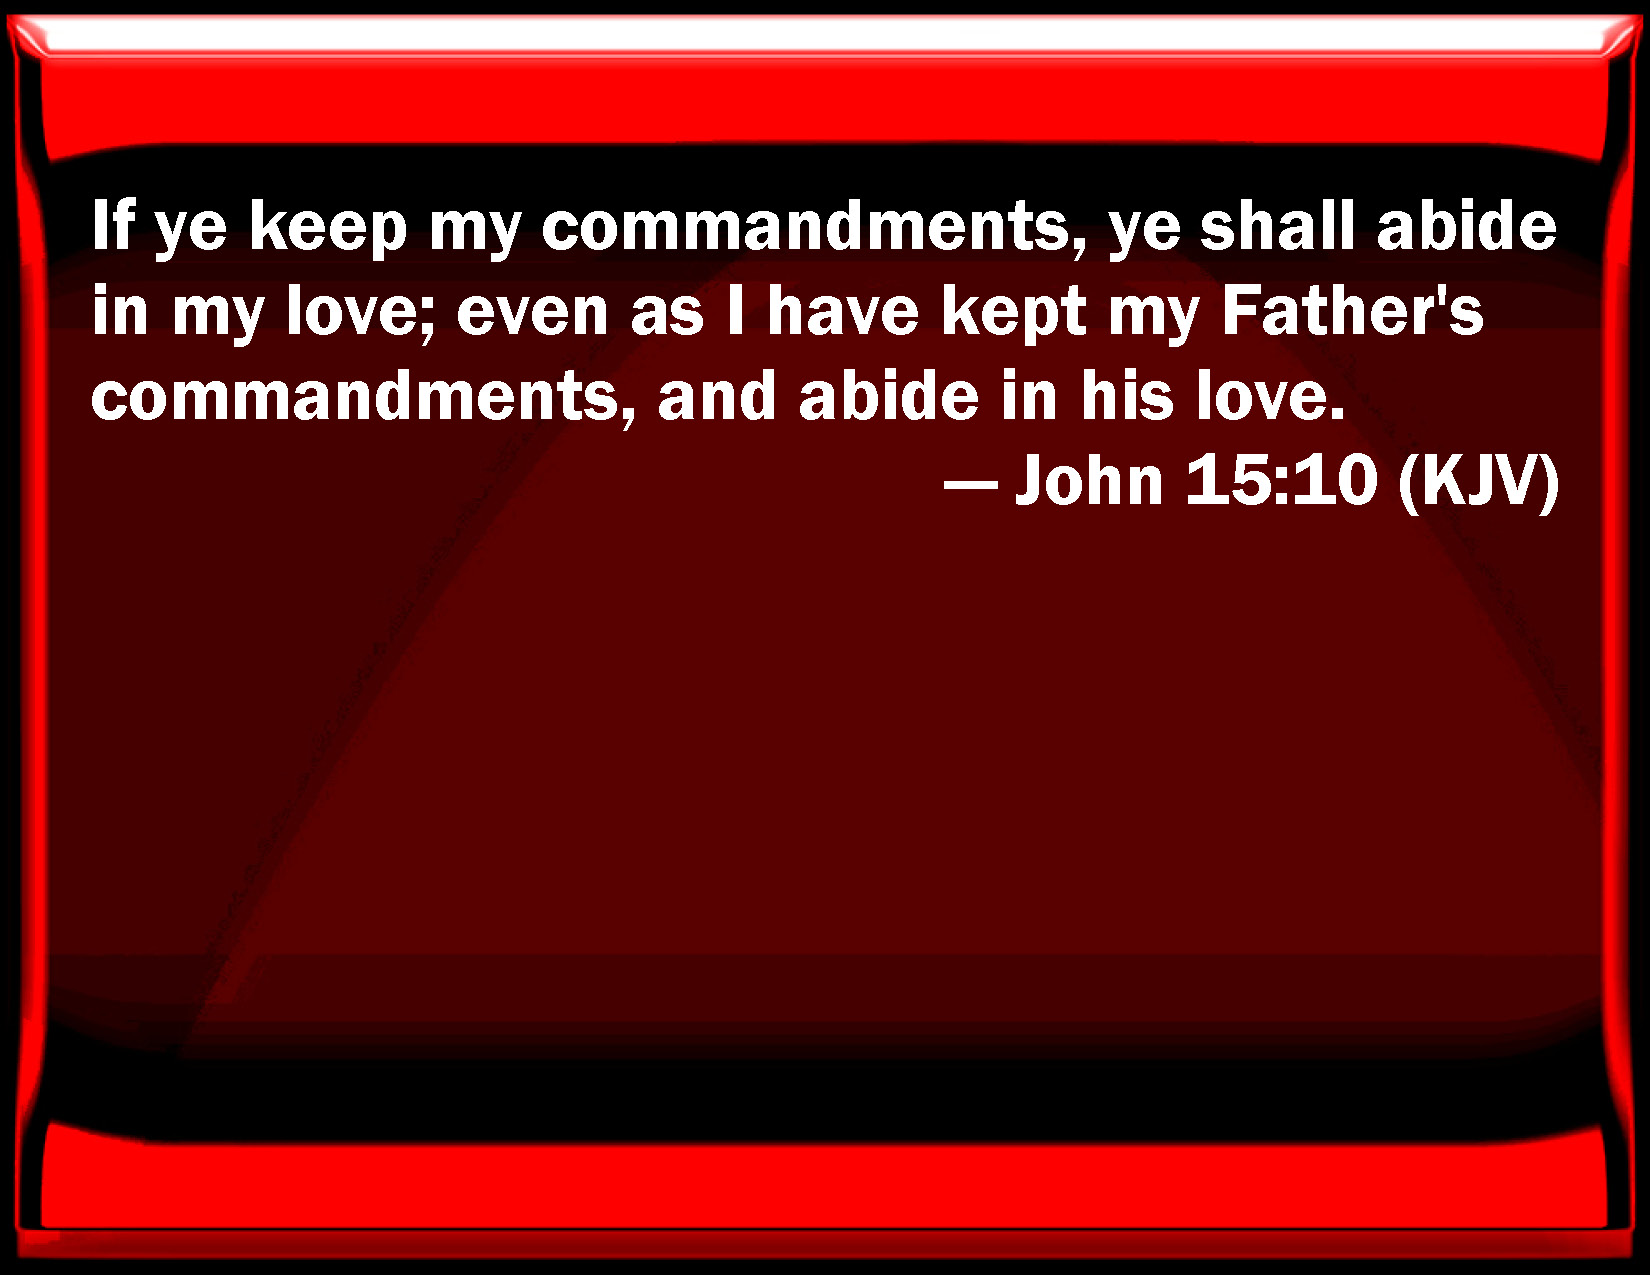 if you love me keep my commandments kv